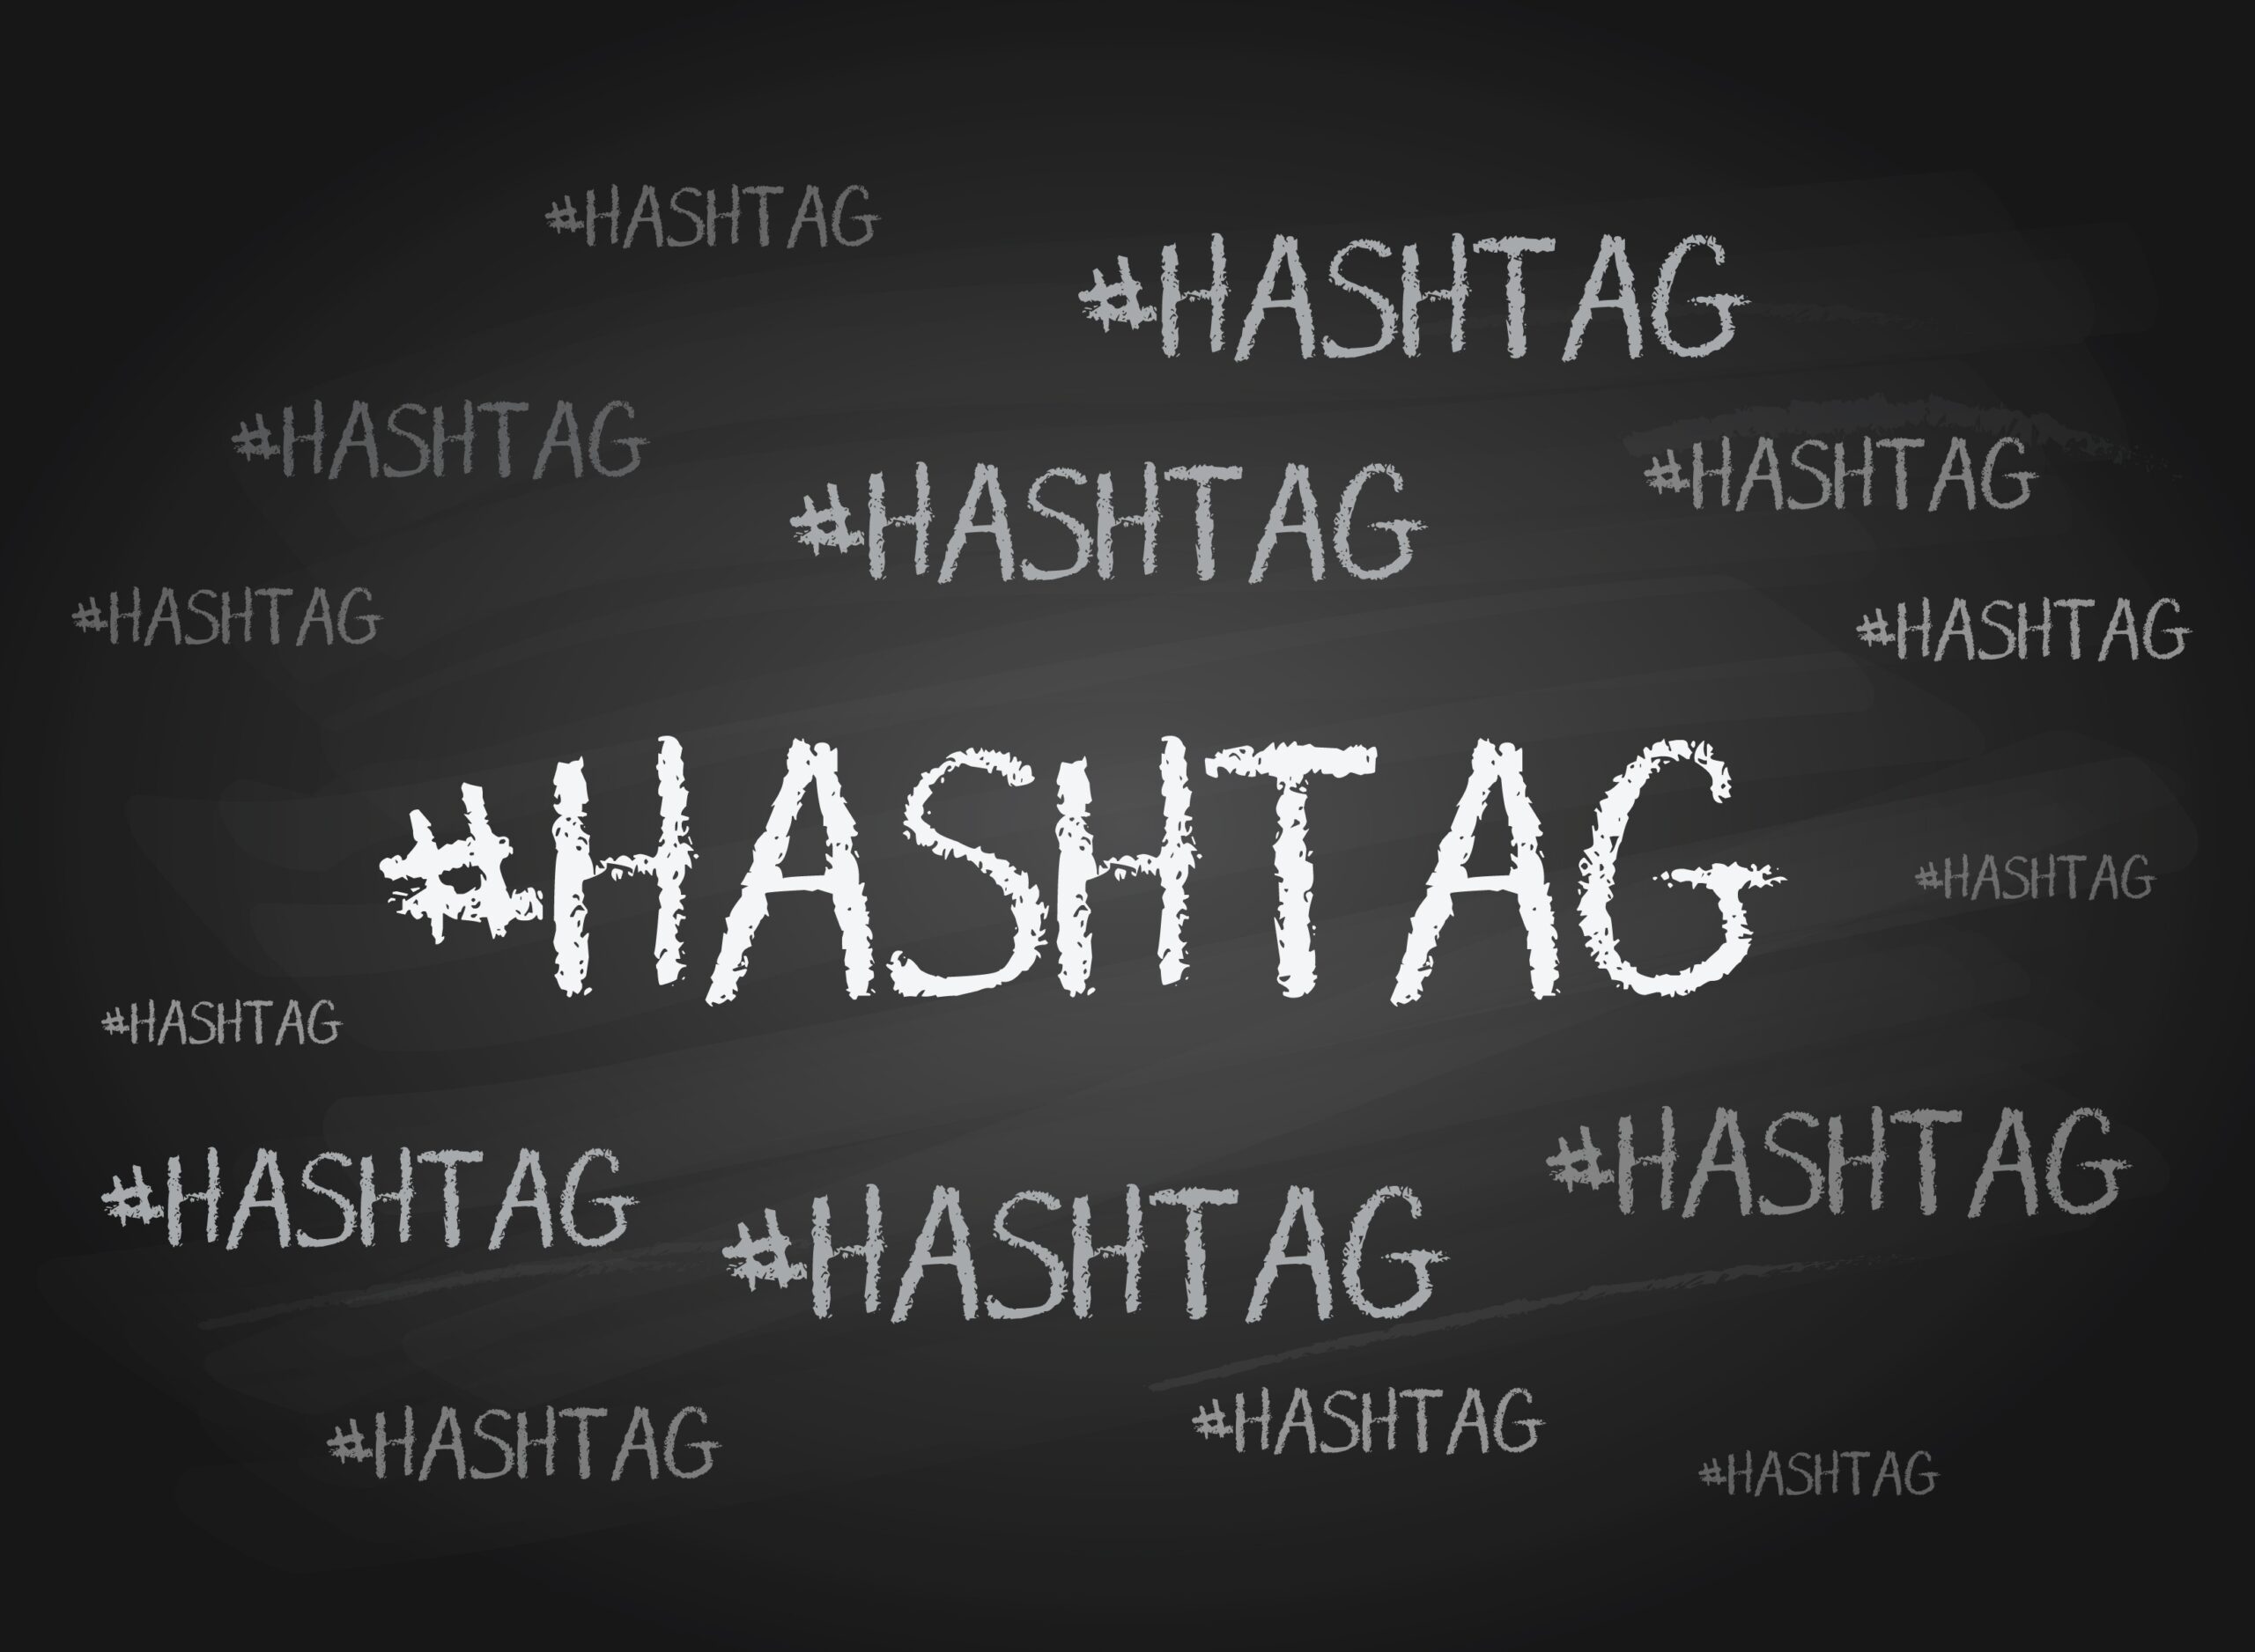 hashtag image for social media